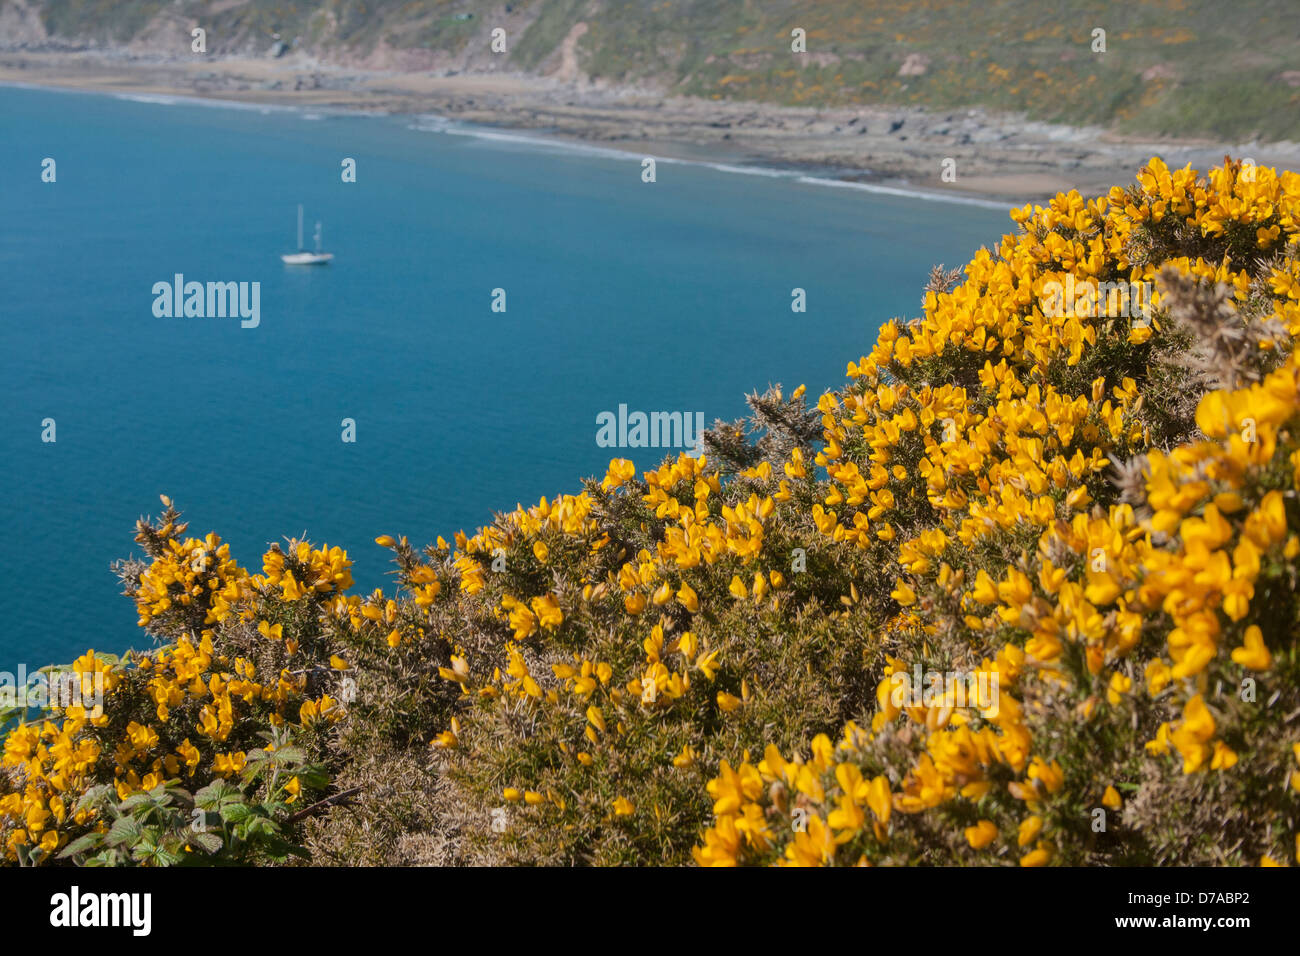 Gorse bushes on a cliffs edge looking down onto a blue ocean Stock Photo